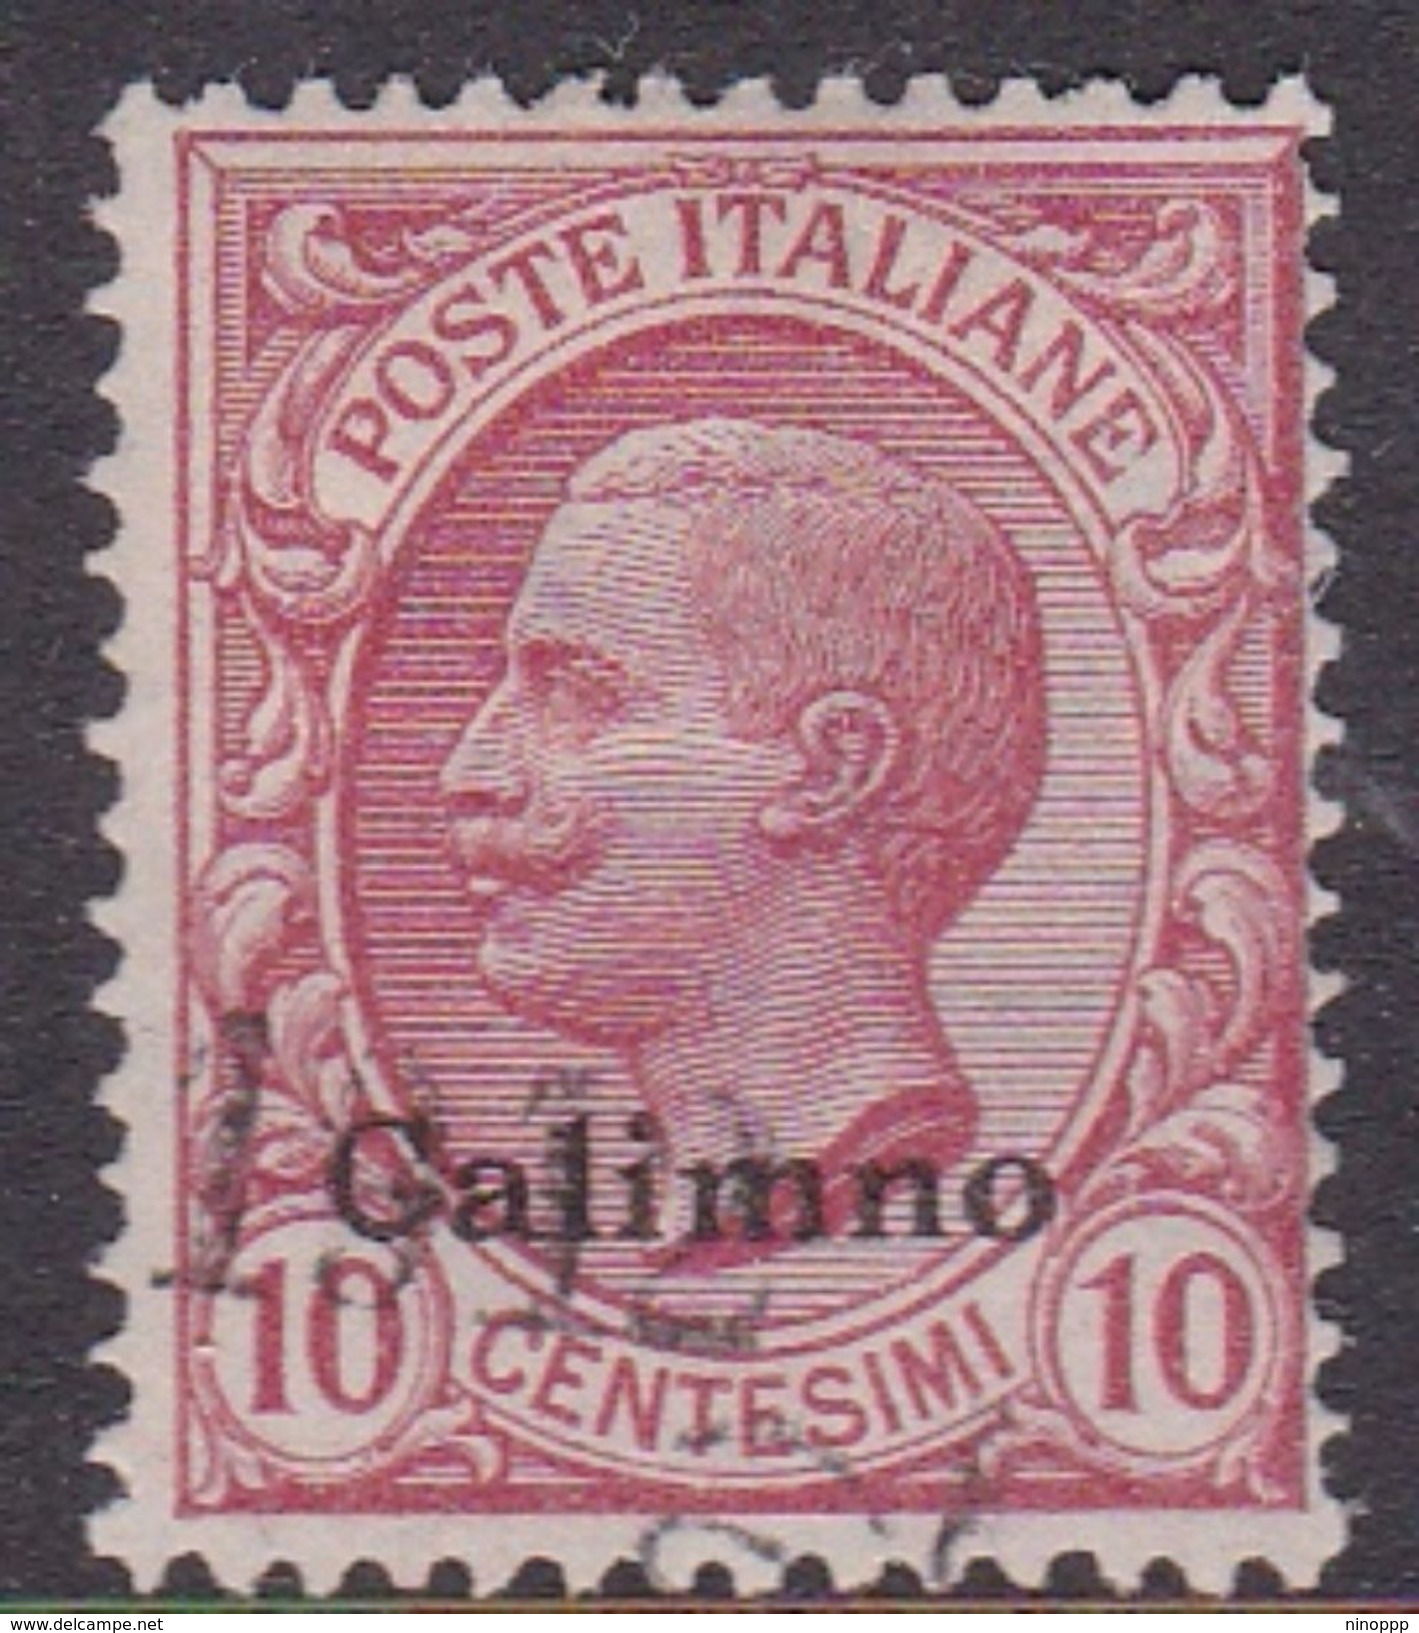 Italy-Colonies And Territories-Aegean-Calino S3  1912 10c Rose Used - Aegean (Calino)